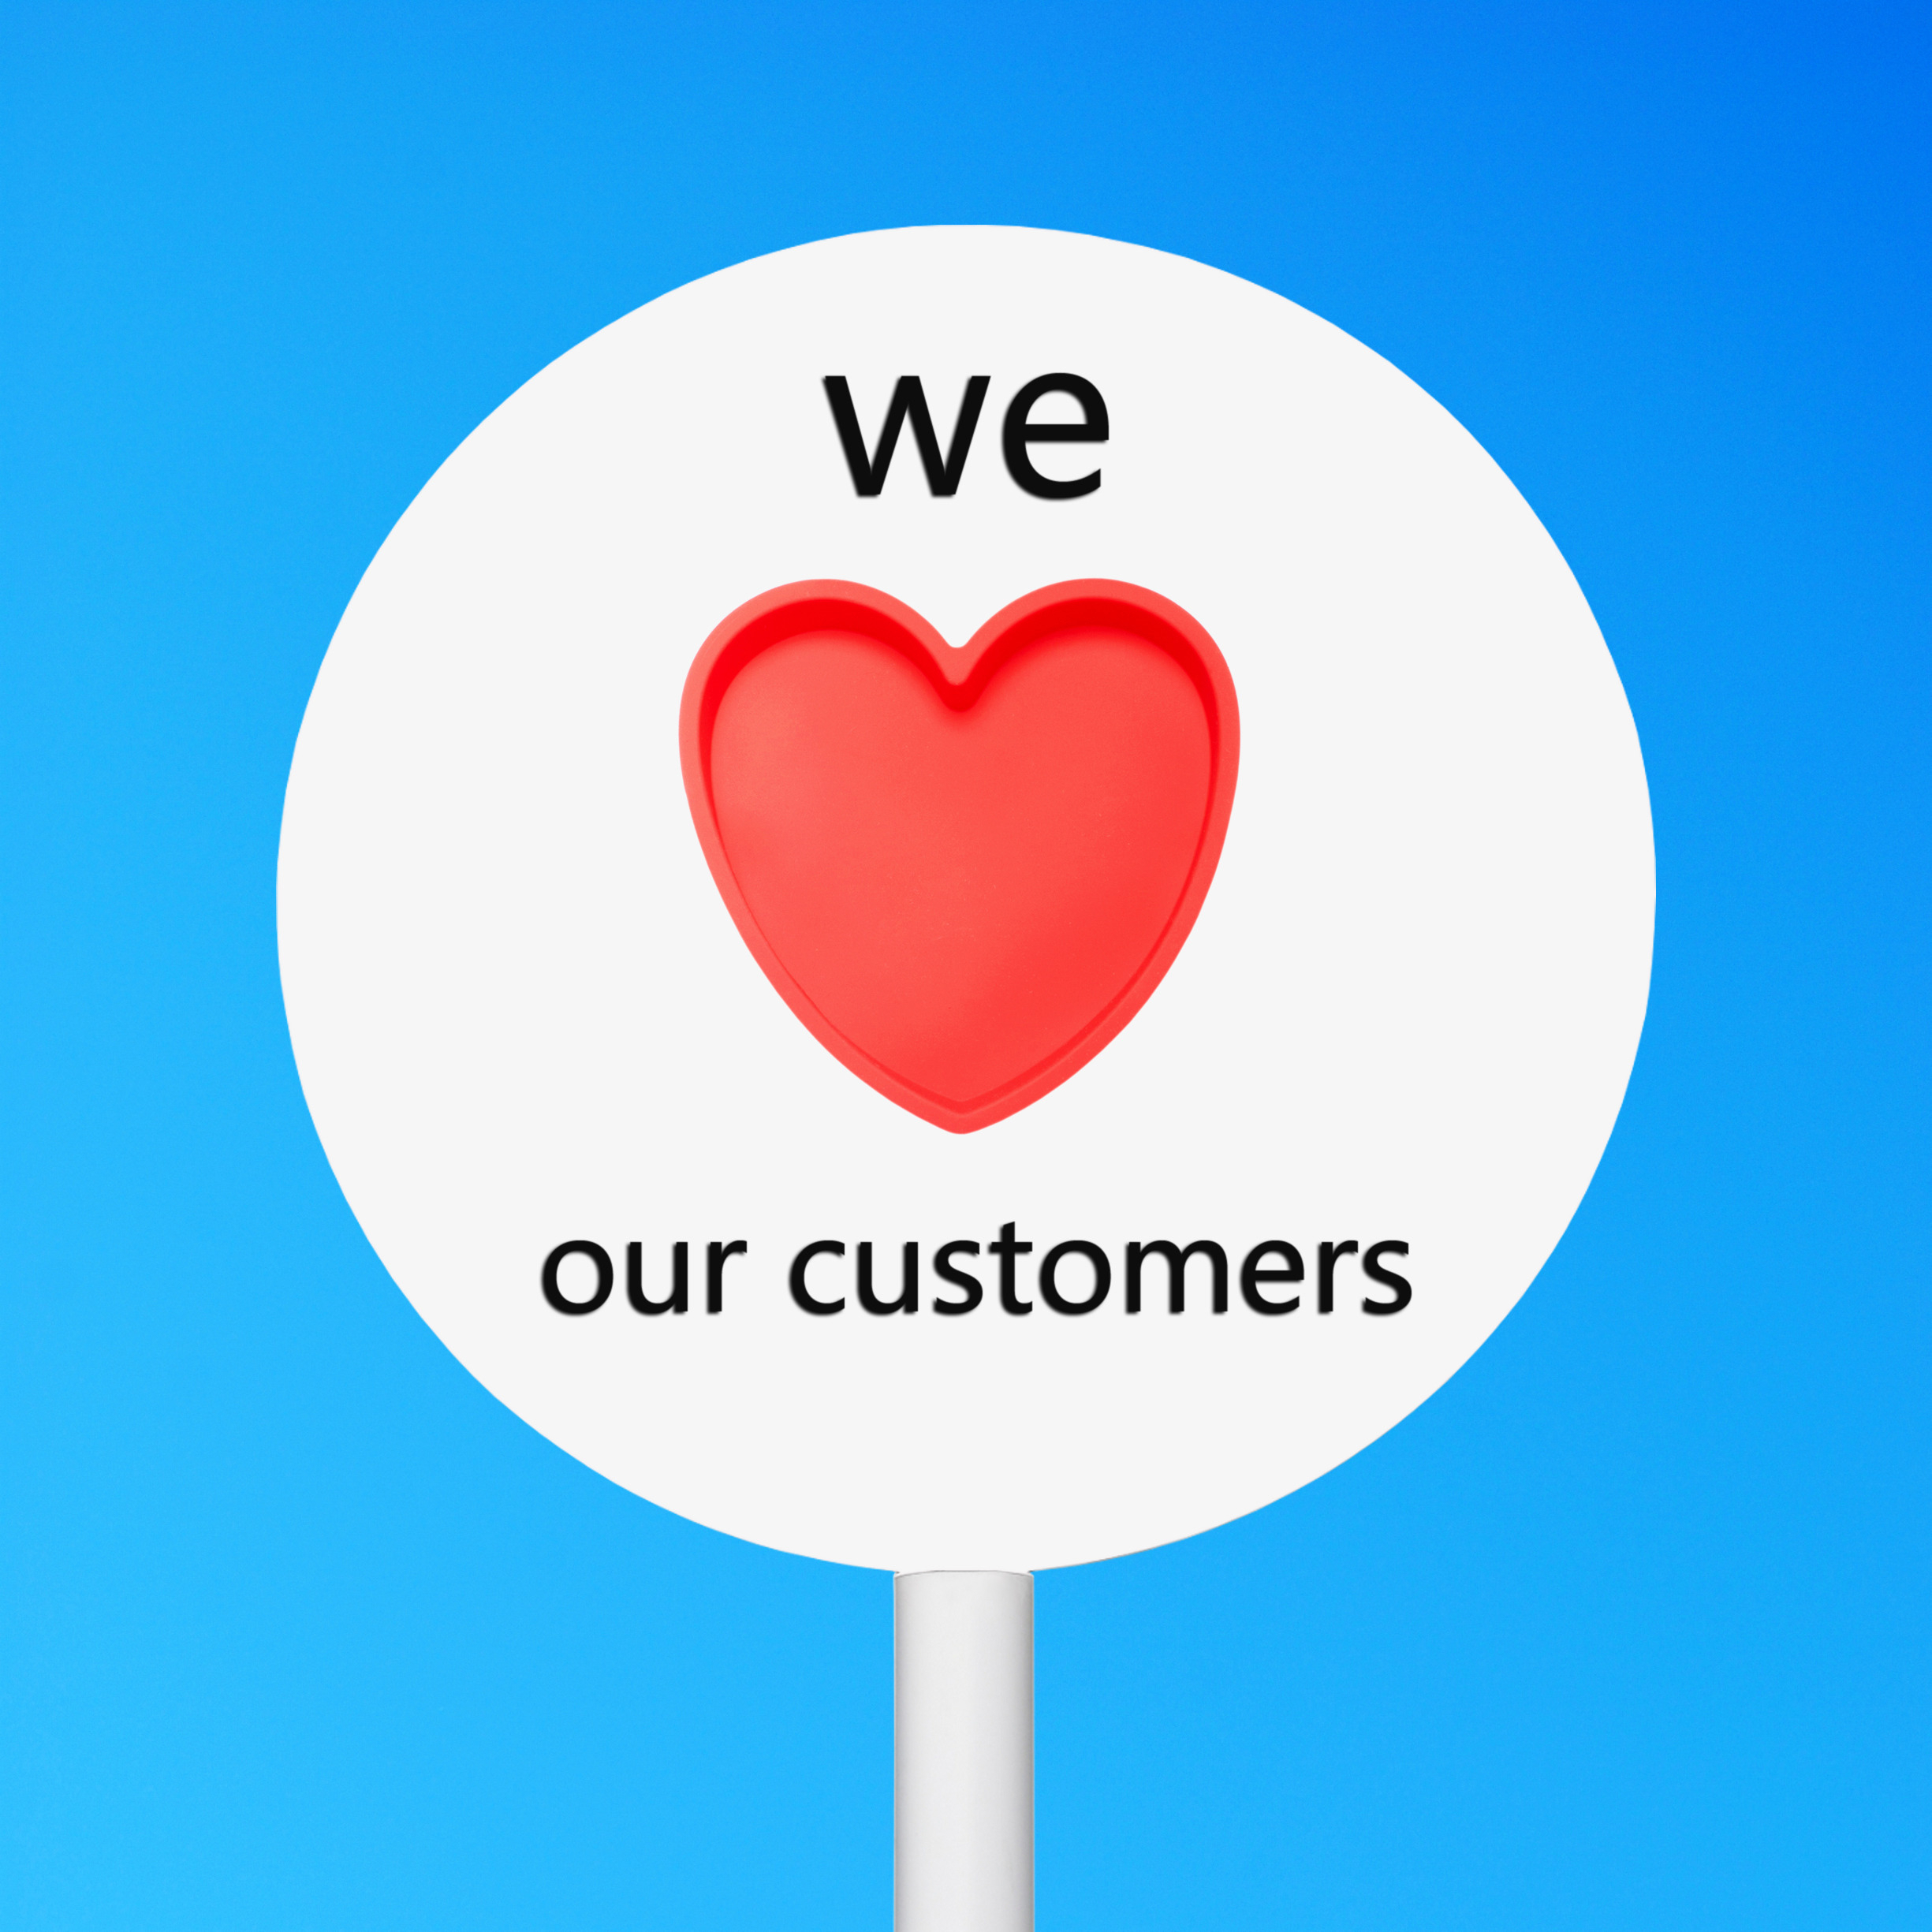 We love our customers f1owlgad